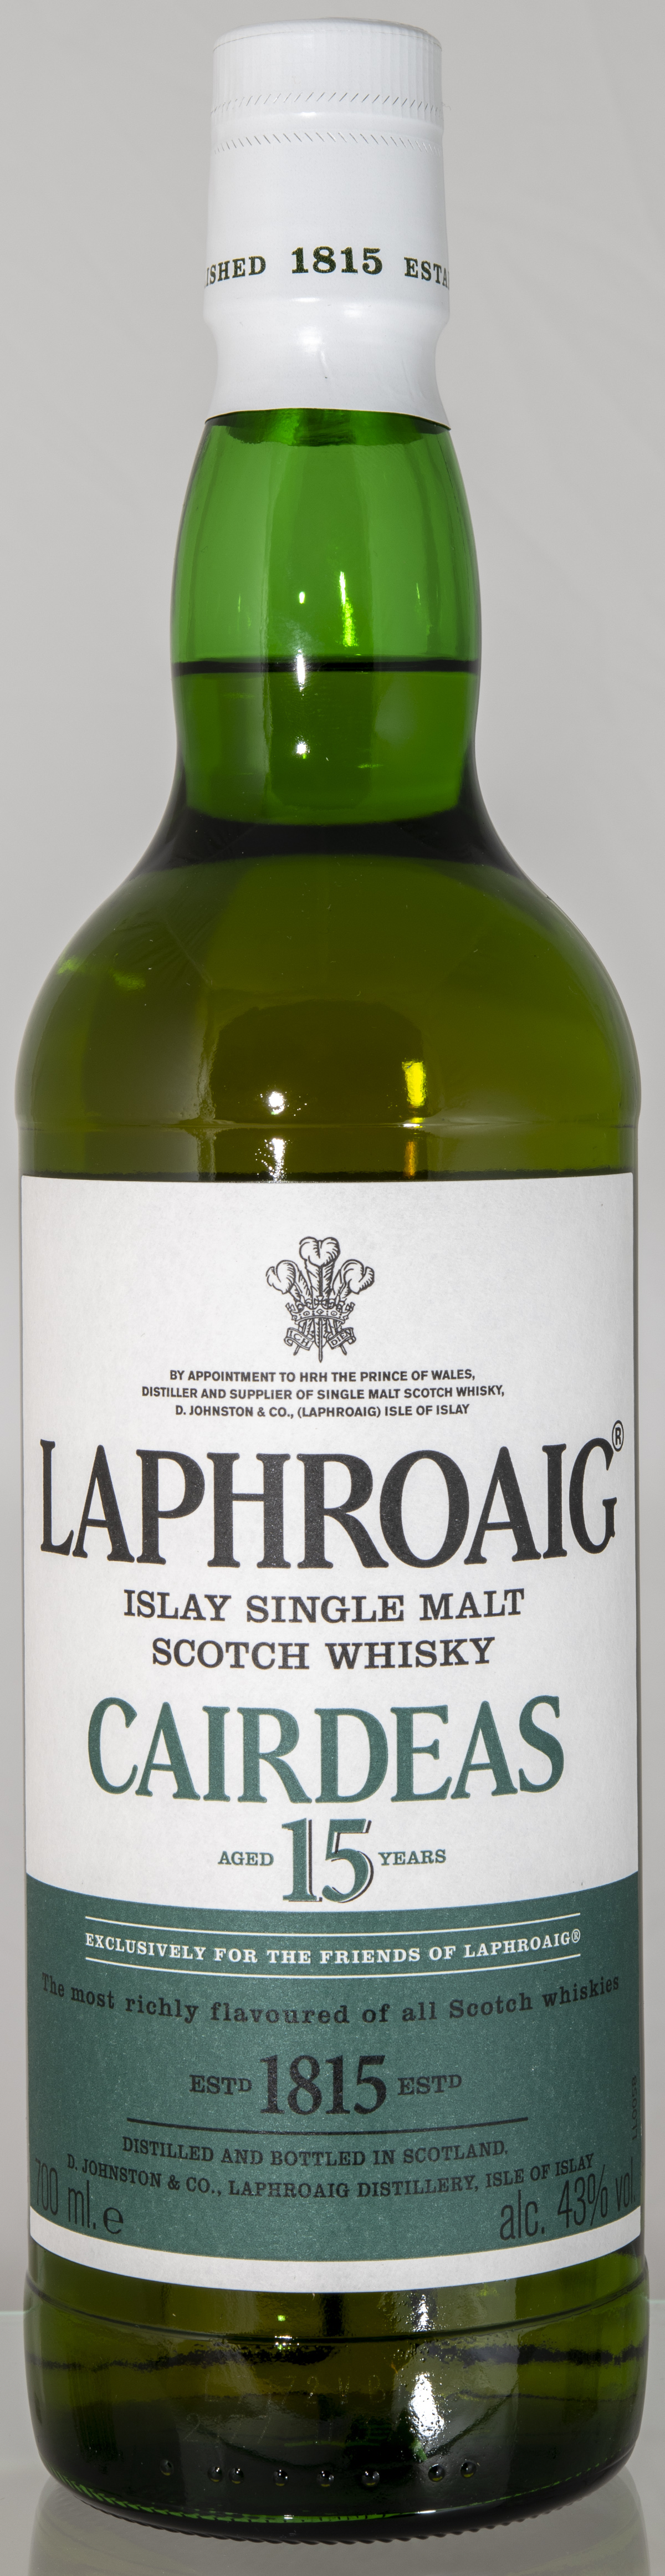 Billede: D85_8284 - Laphroaig Cairdeas 15 - bottle front.jpg